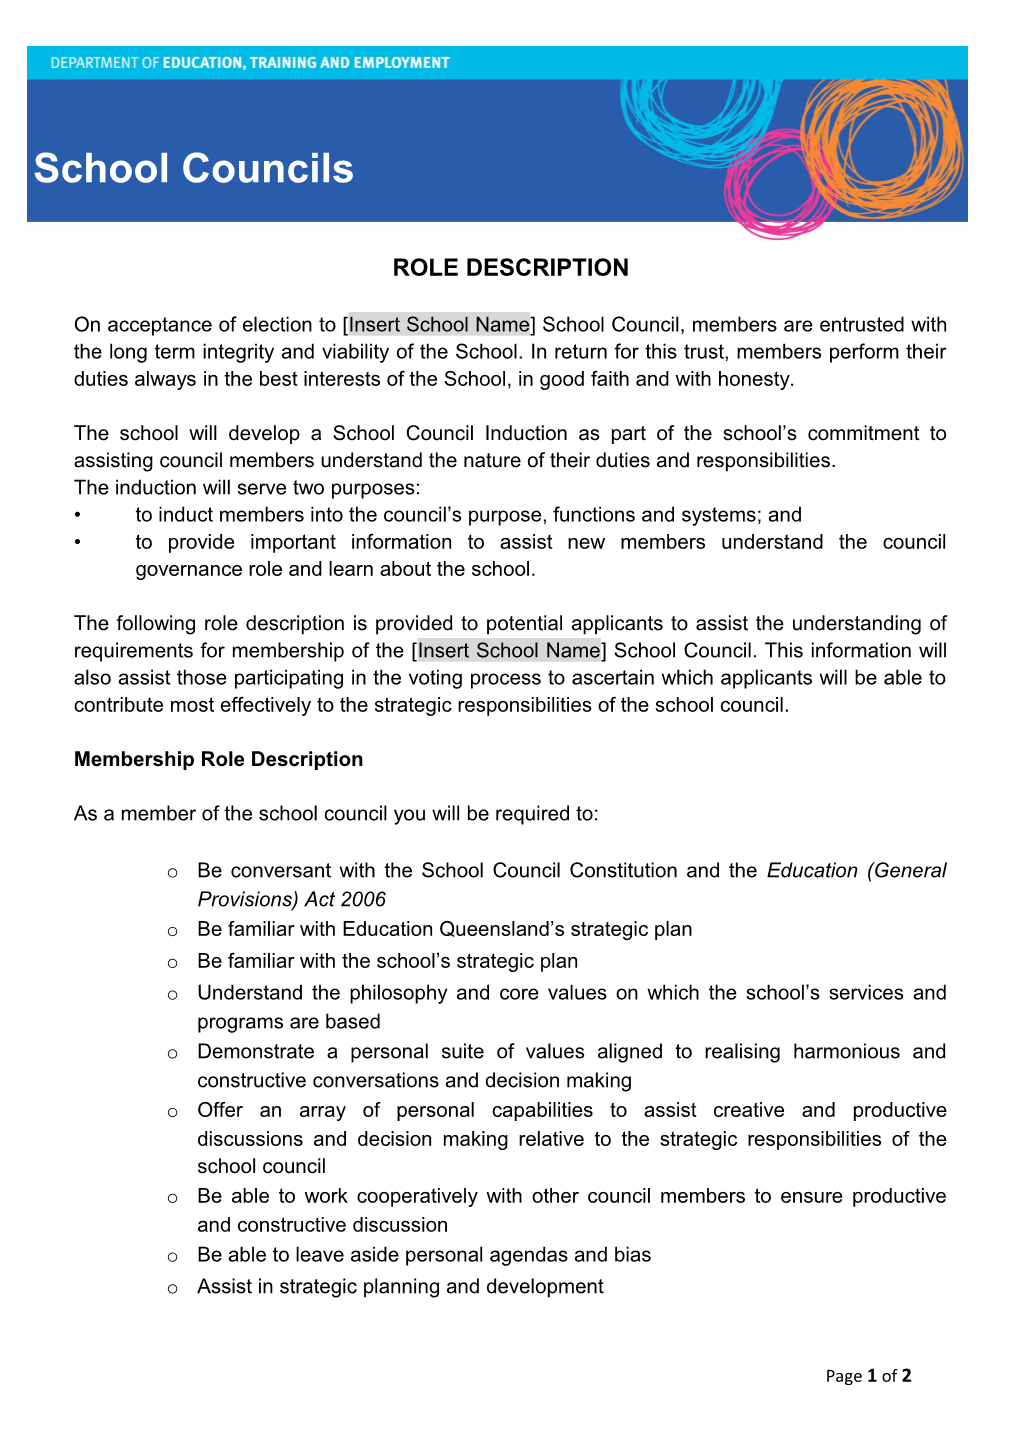 IPS - Role Description - School Council Members - Fact Sheet